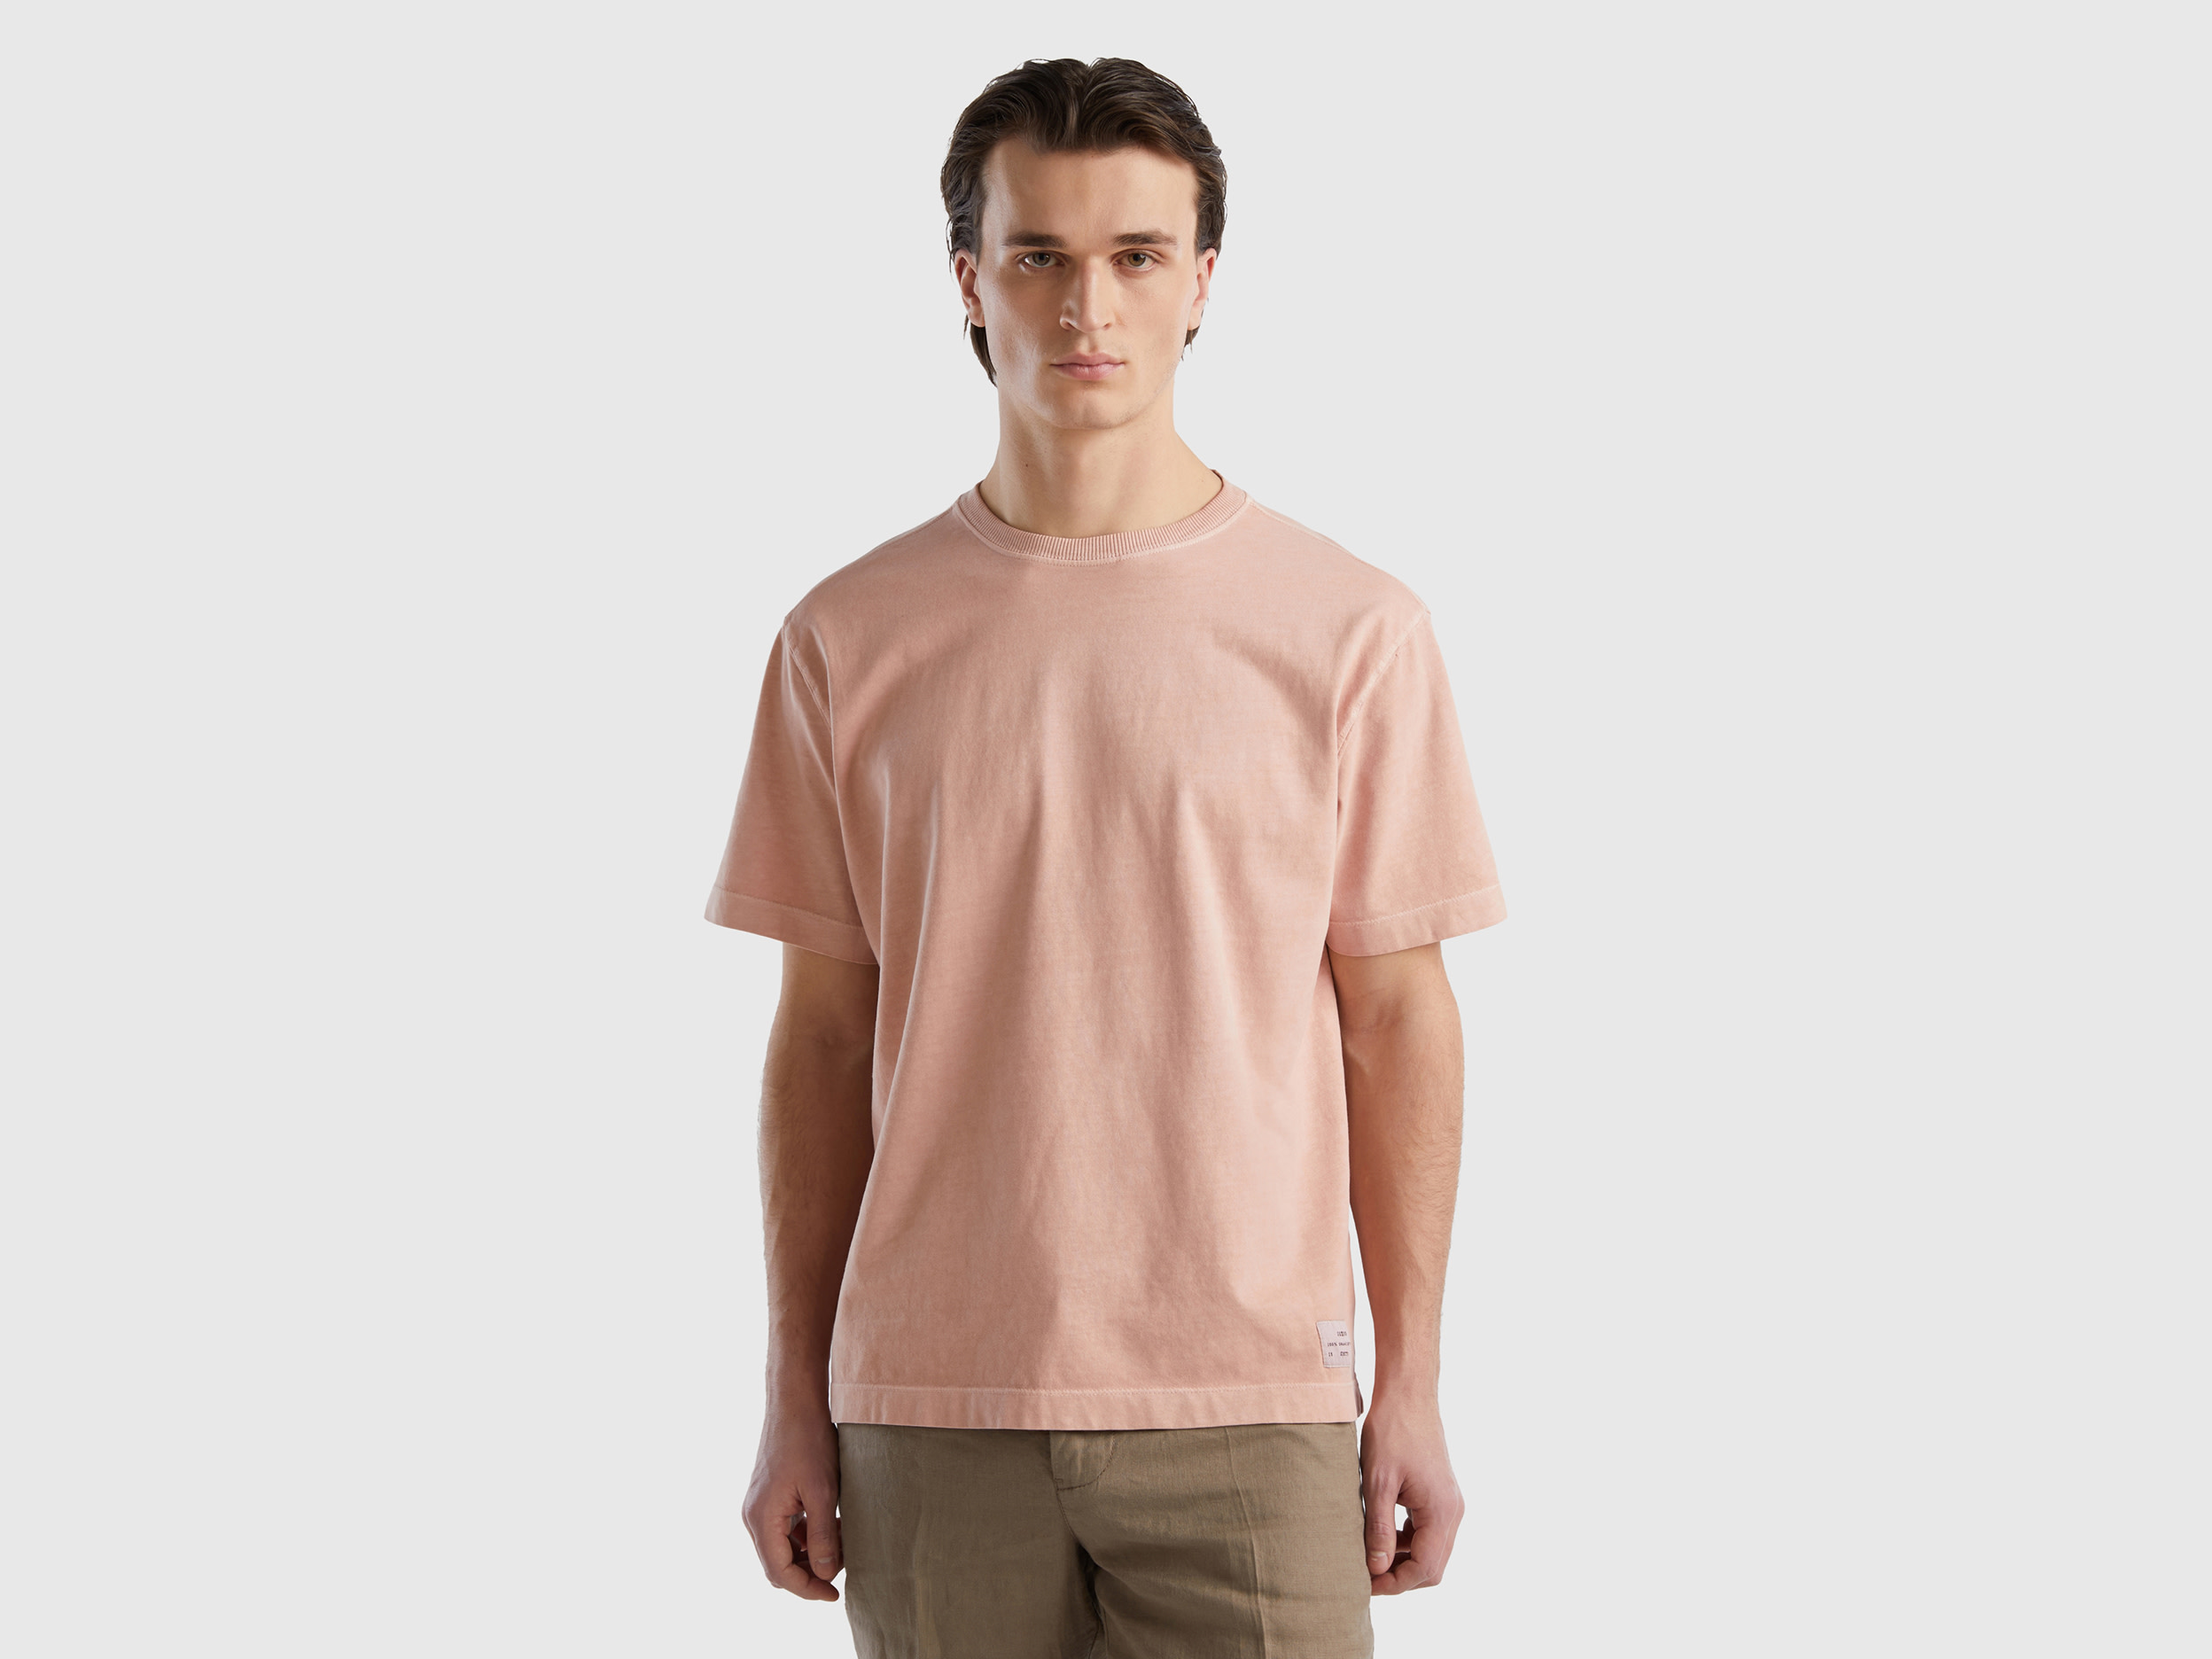 Image of Benetton, 100% Organic Cotton Crew Neck T-shirt, size S, Nude, Men